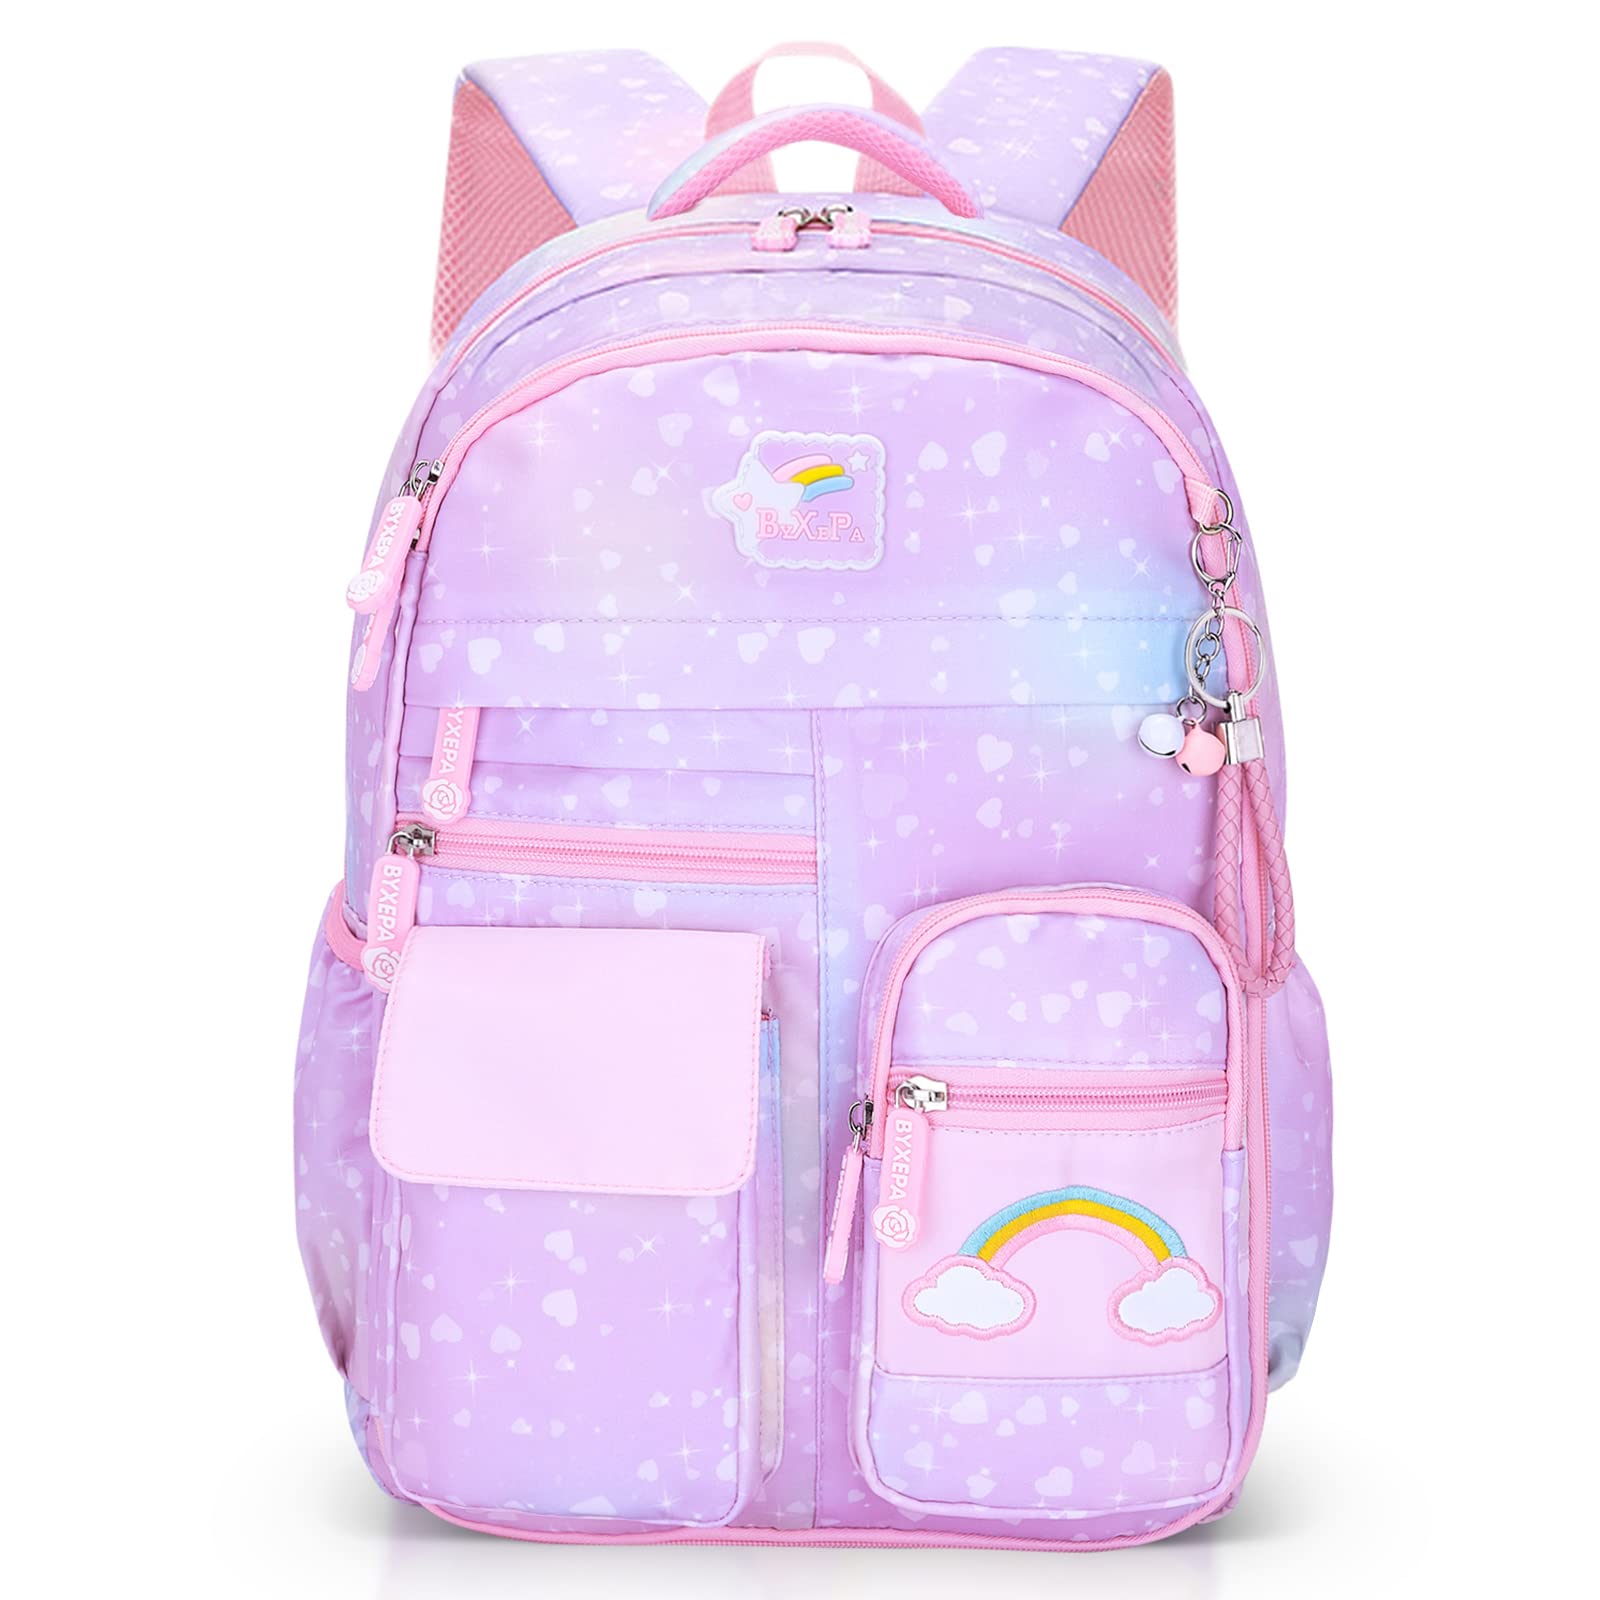 Buy Mini Backpack for Women, Purple, Purple at Amazon.in